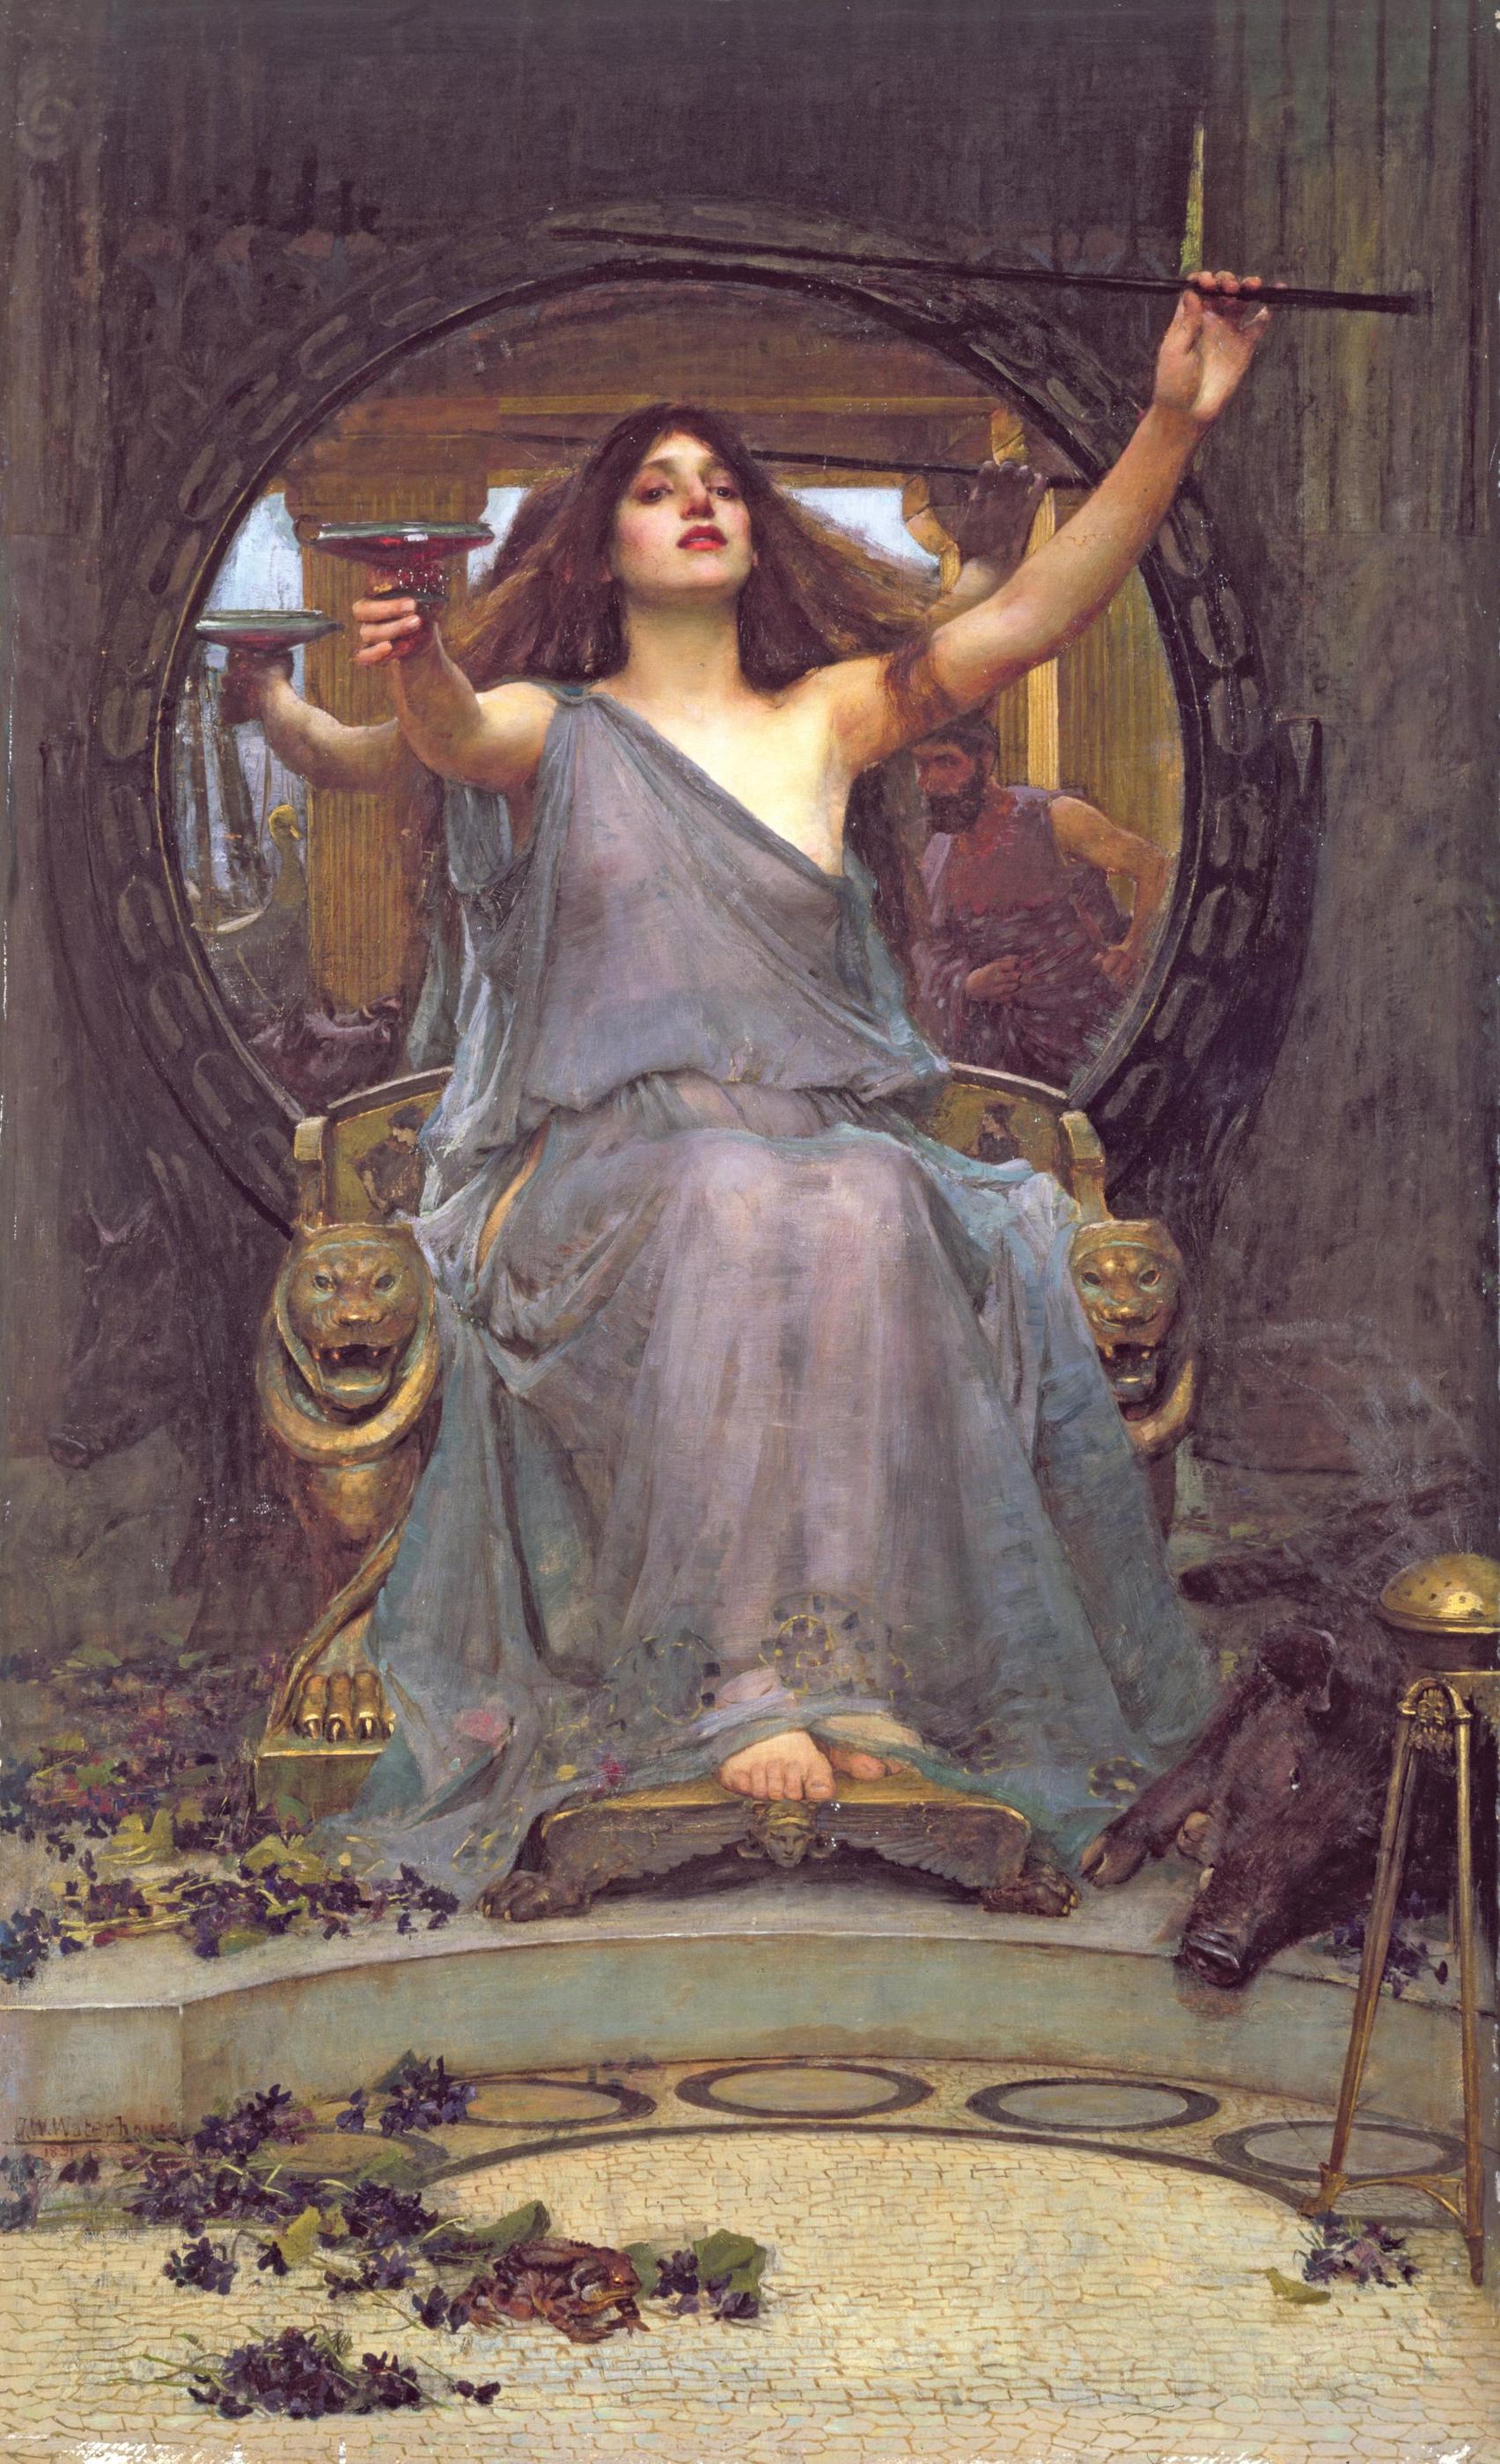 Circe Ofreciendo la copa a Odiseo by John William Waterhouse - 1891 - 175 x 92 cm Gallery Oldham